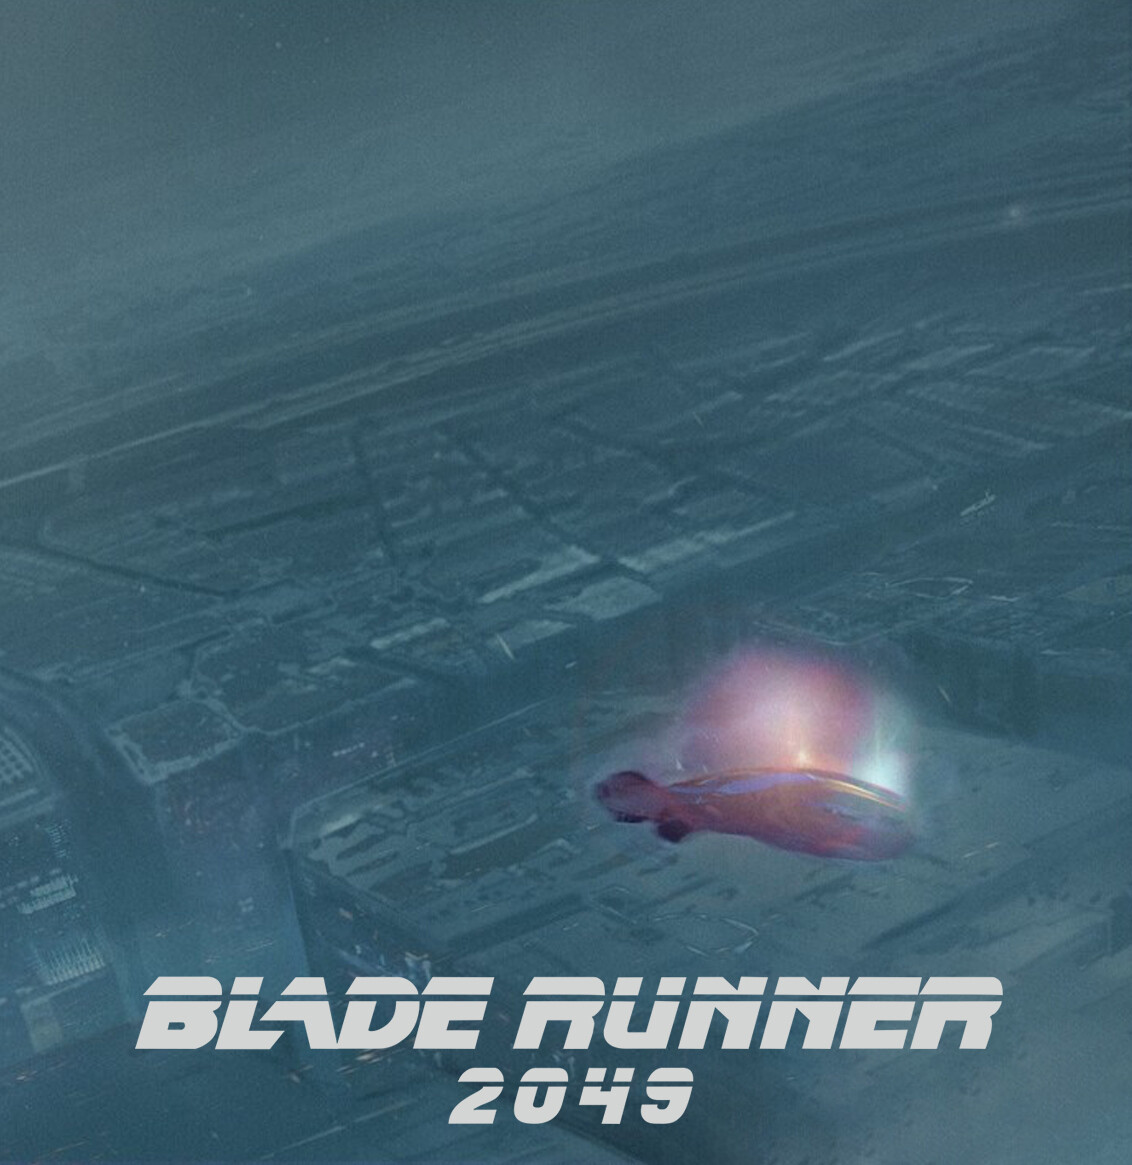 Bladerunner 2049 : K's Approach to LA